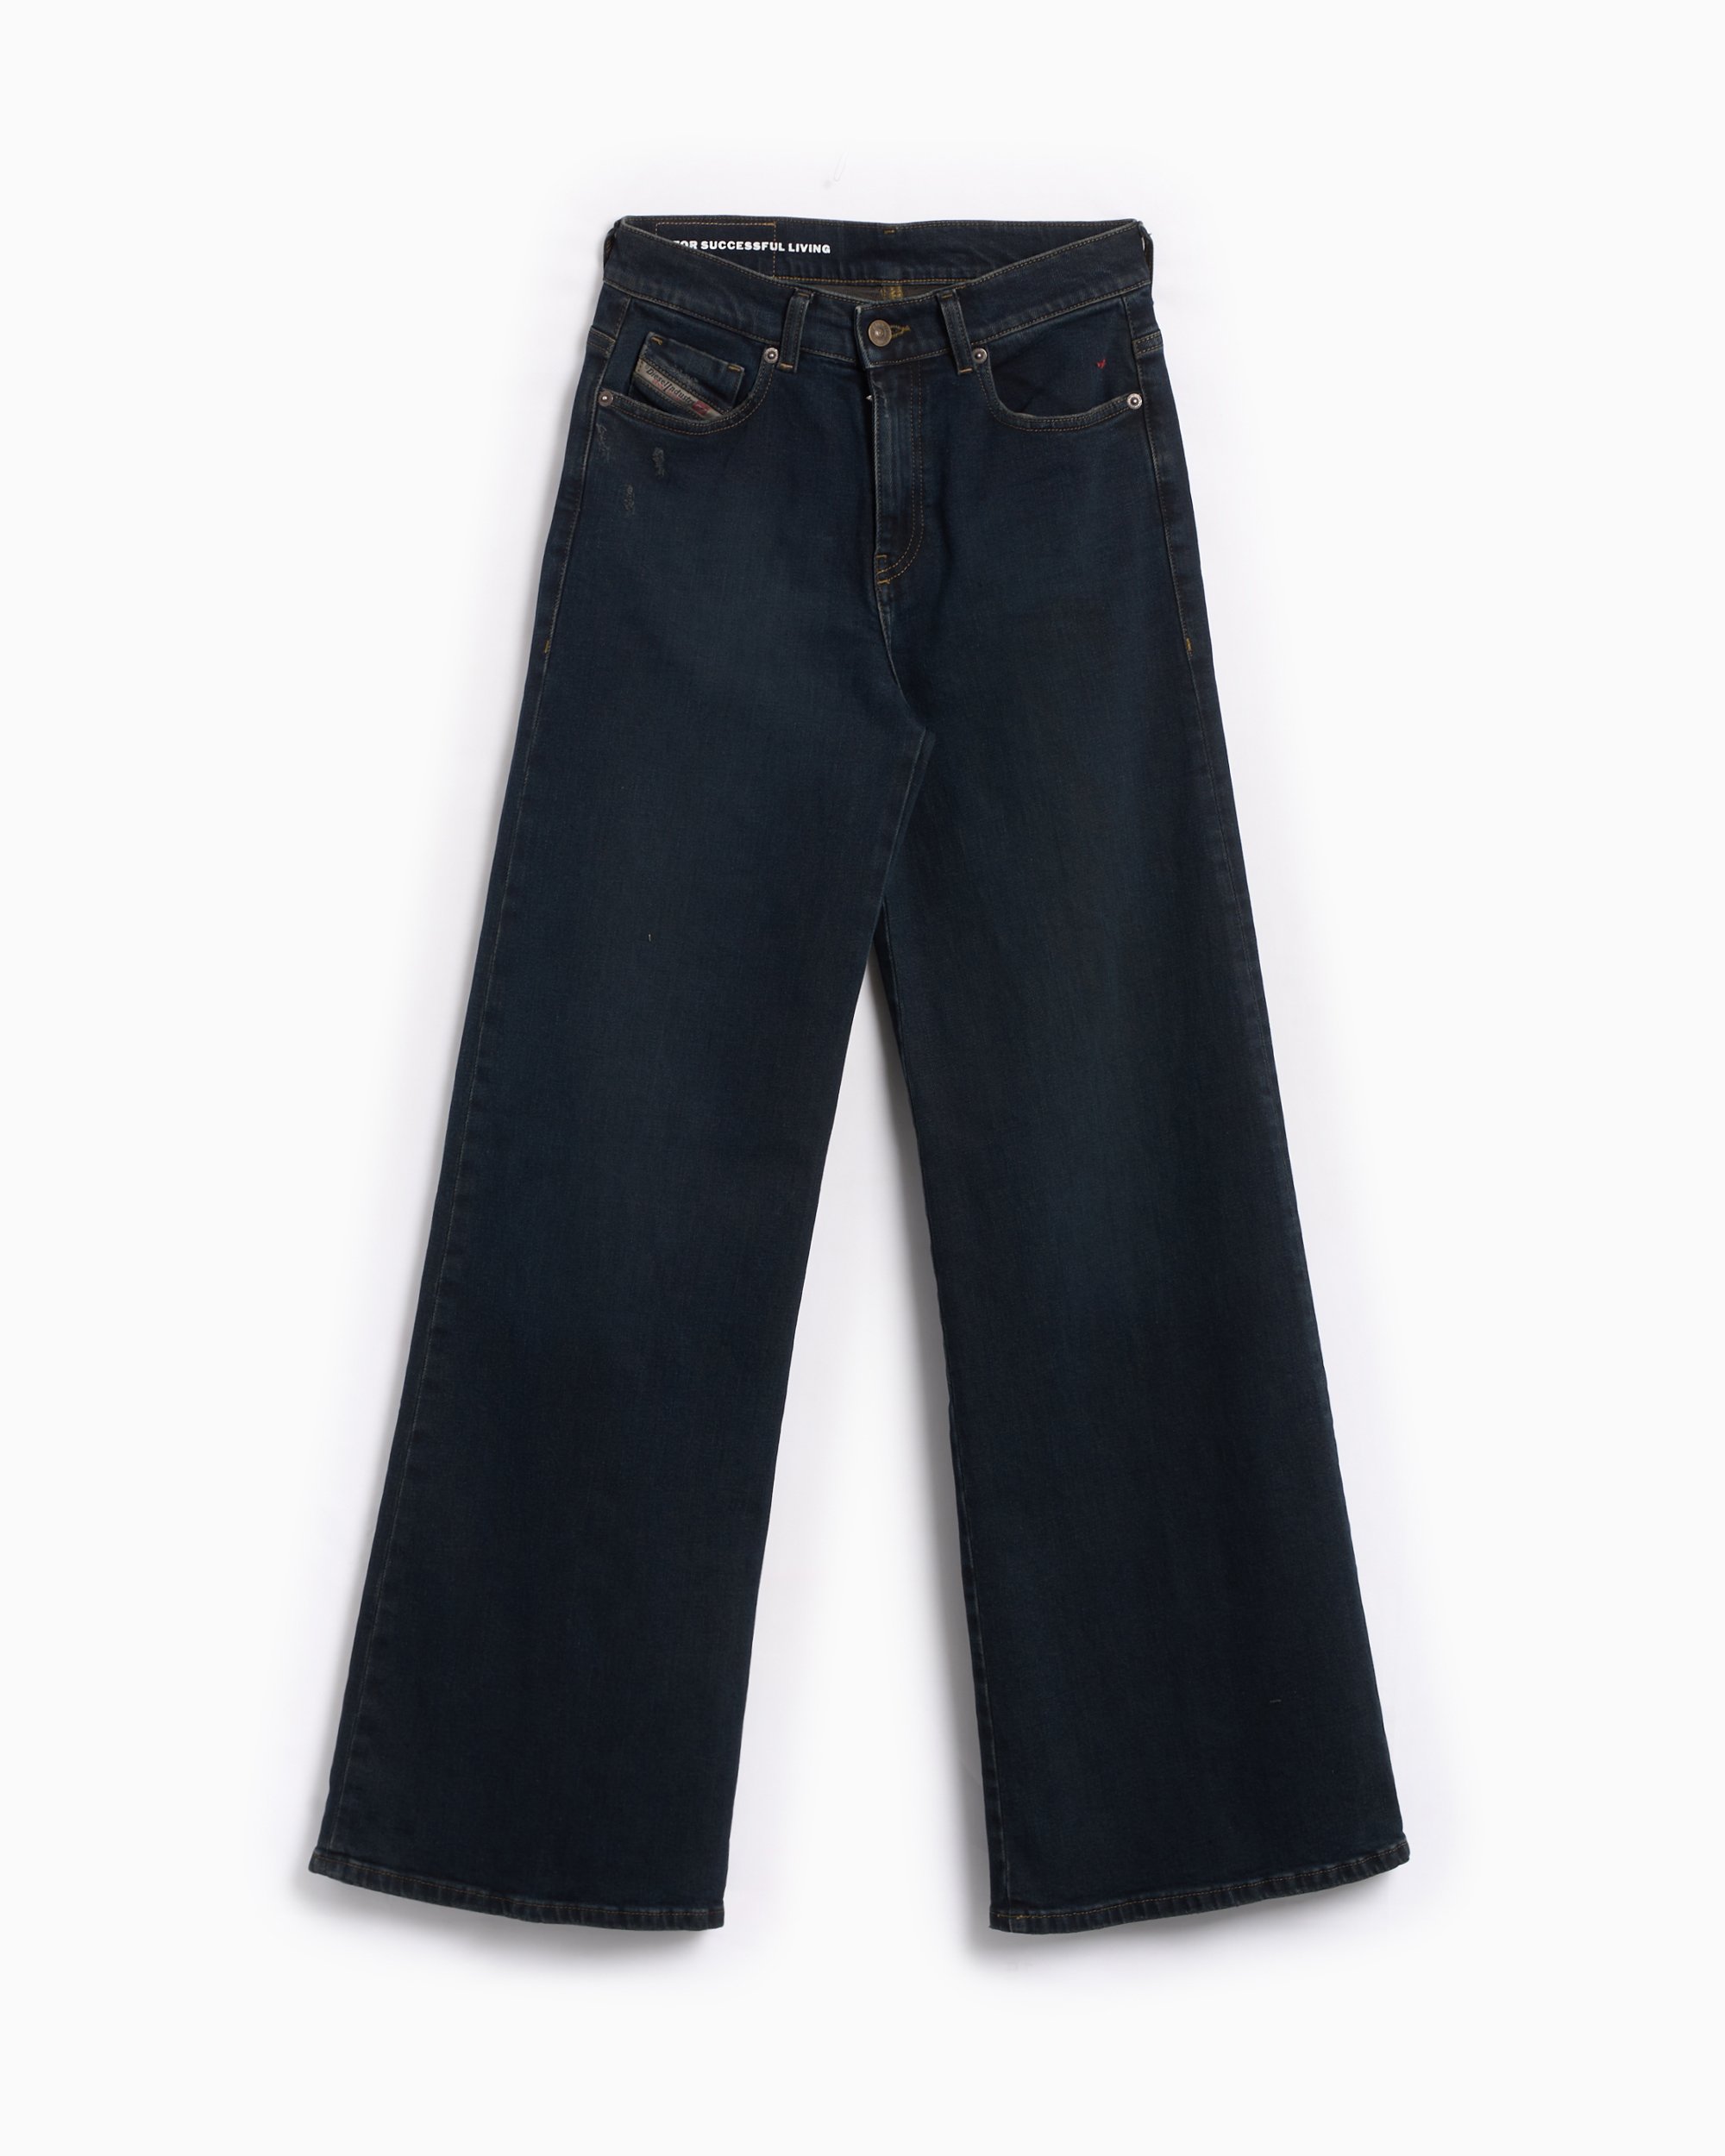 Cotton On FLARE PANT - Trousers - black - Zalando.de